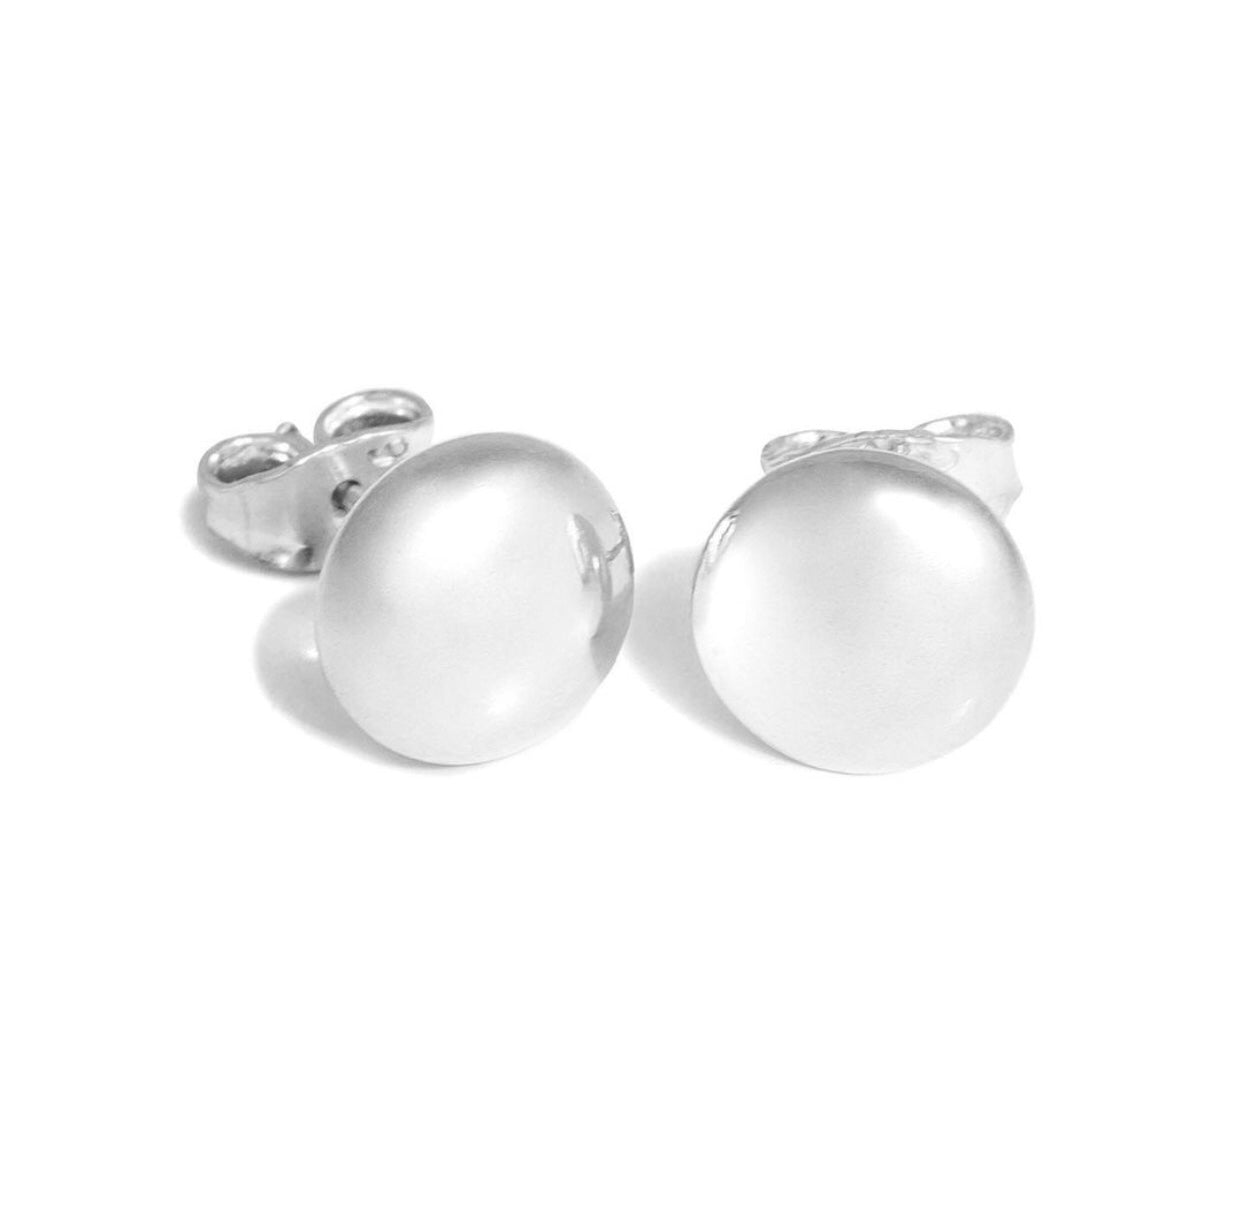 Claudia Lira Jewelry - Moon Earrings / Gold-plated